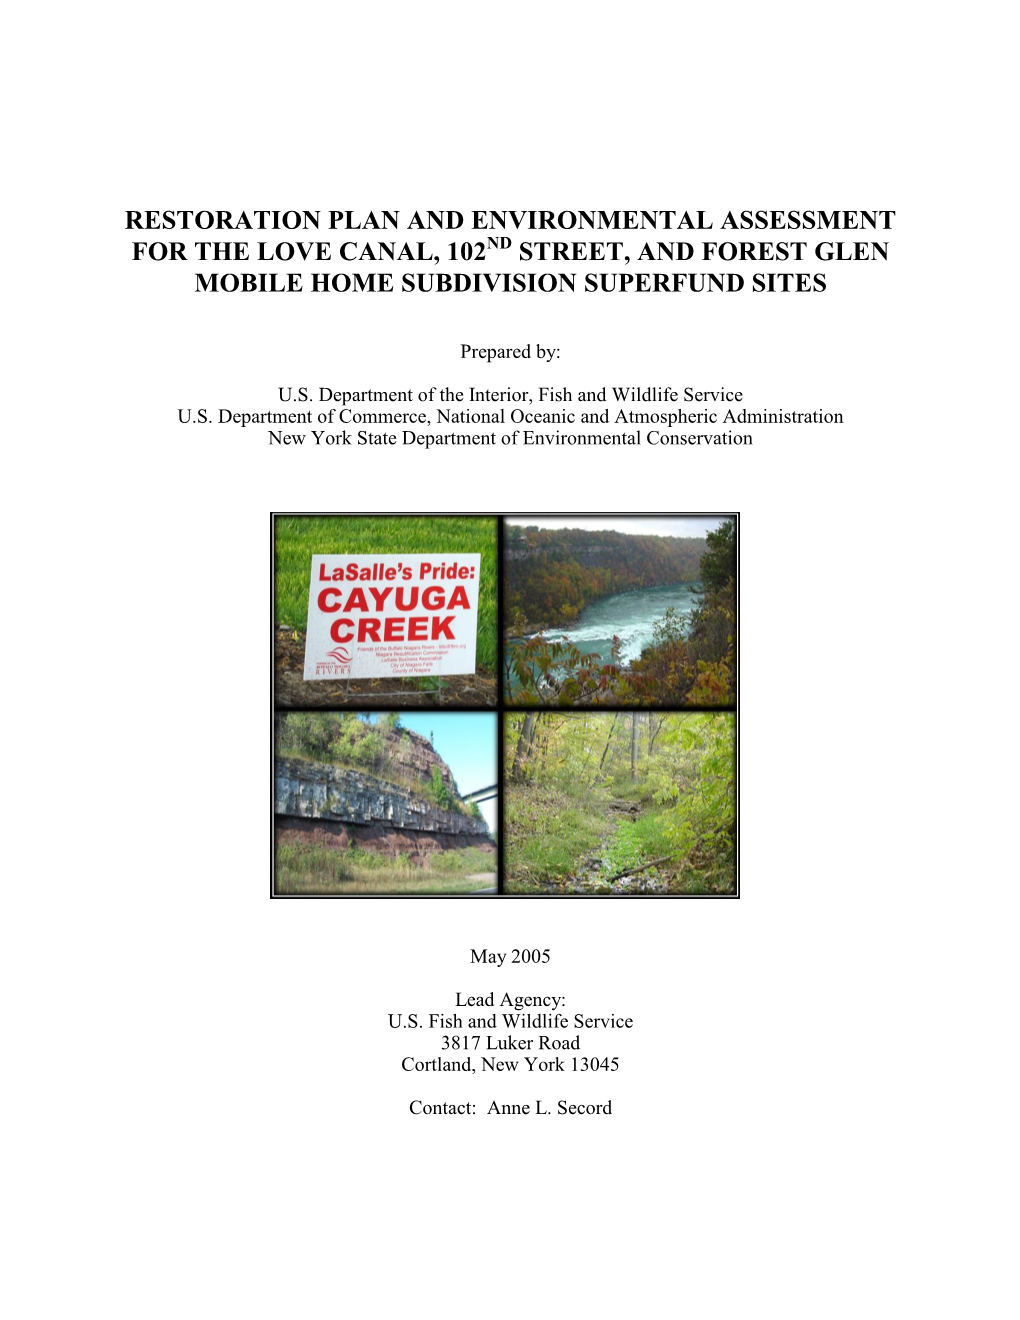 Draft Restoration Plan and Environmental Assessment